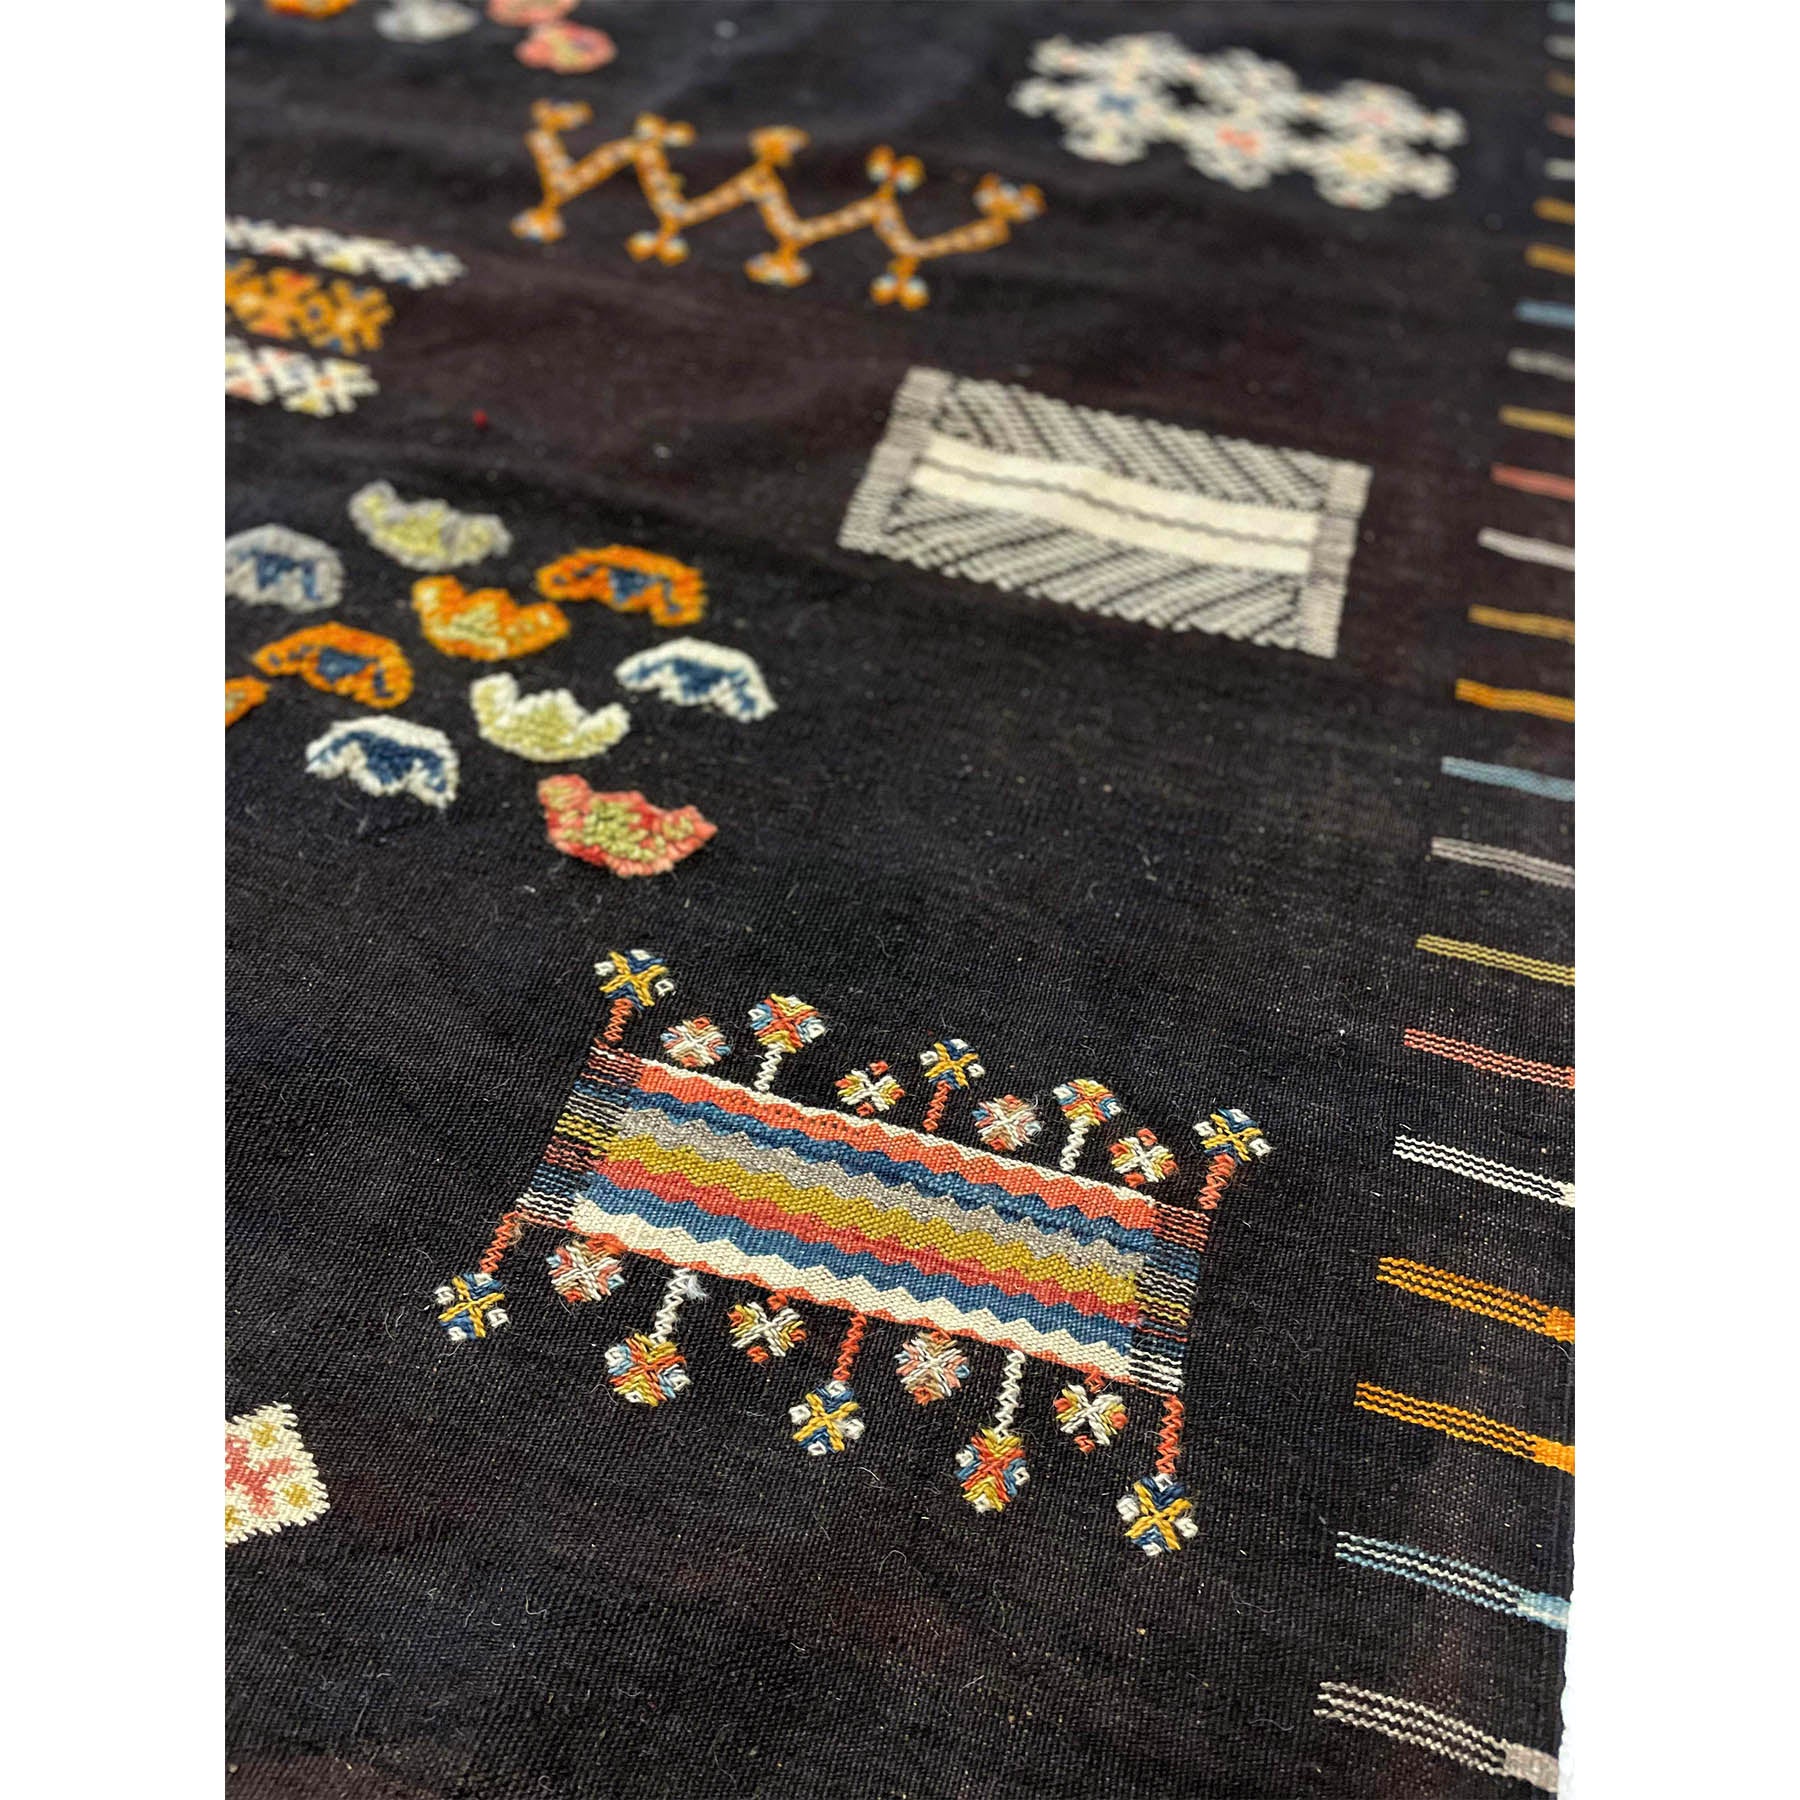 Colorful dark Moroccan area rug with tribal motifs - Kantara | Moroccan Rugs